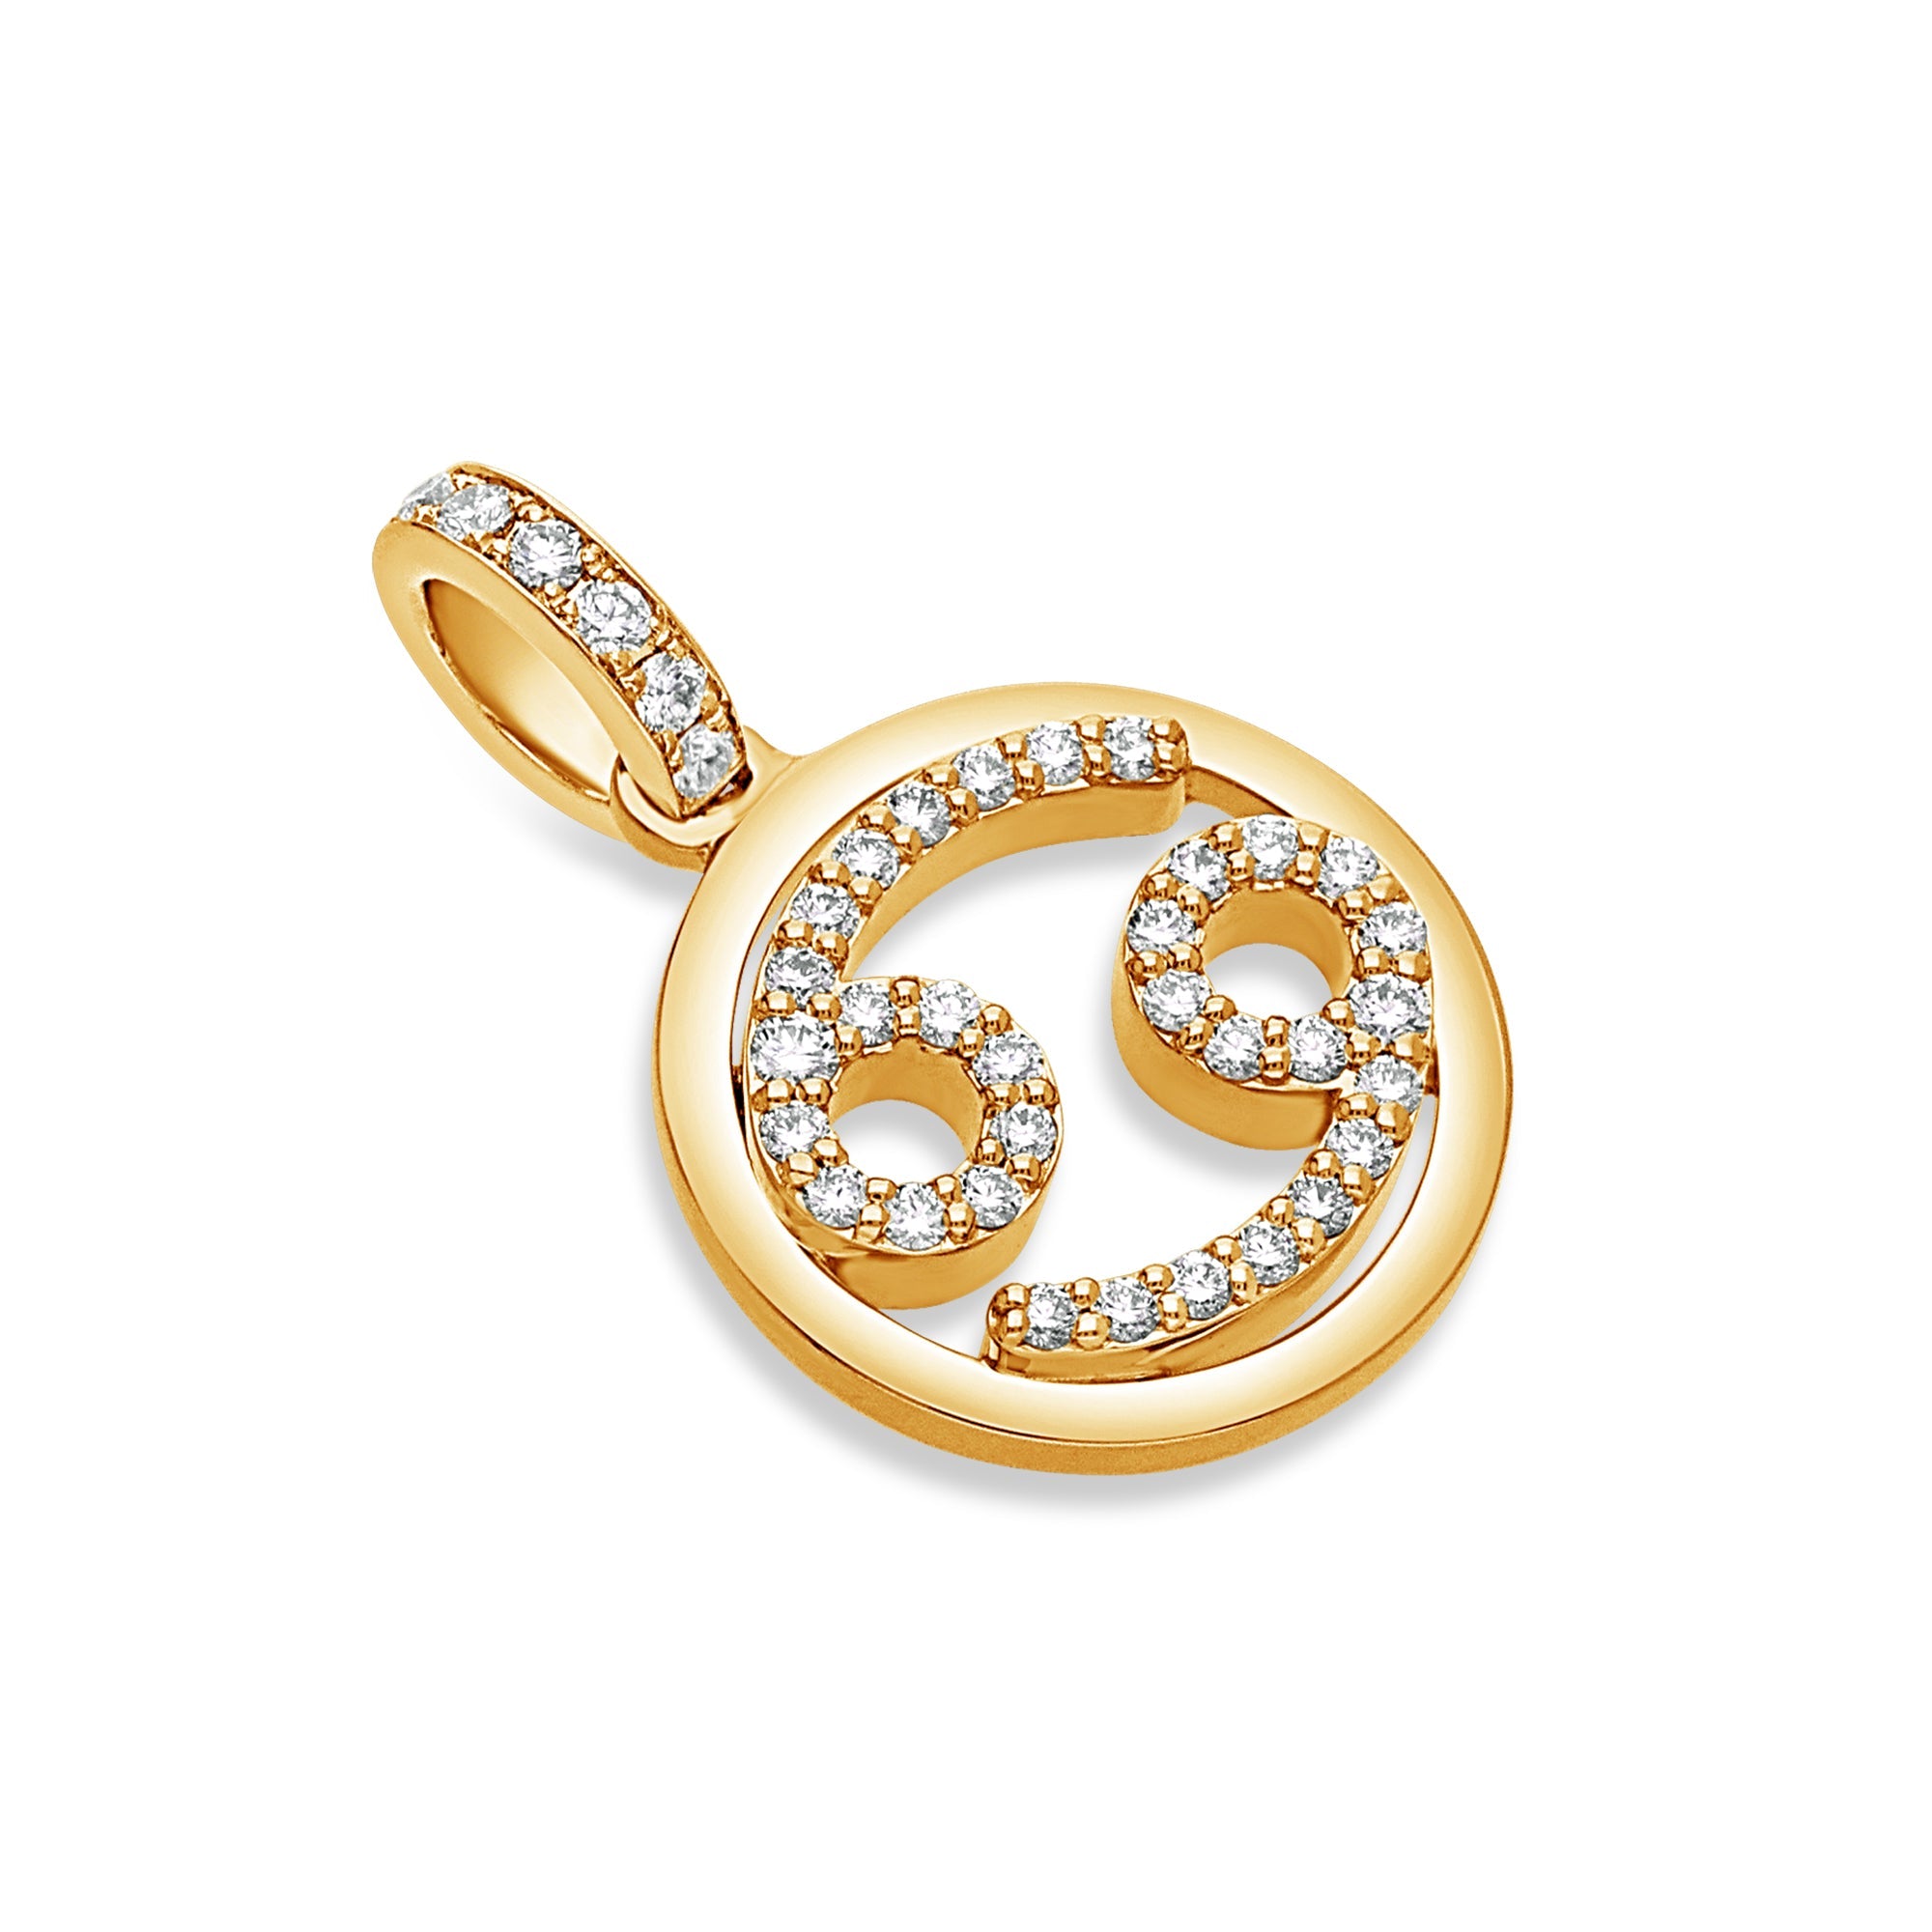 Nano Zodiac Necklace (Cancer) - Diamond Necklace - IF &